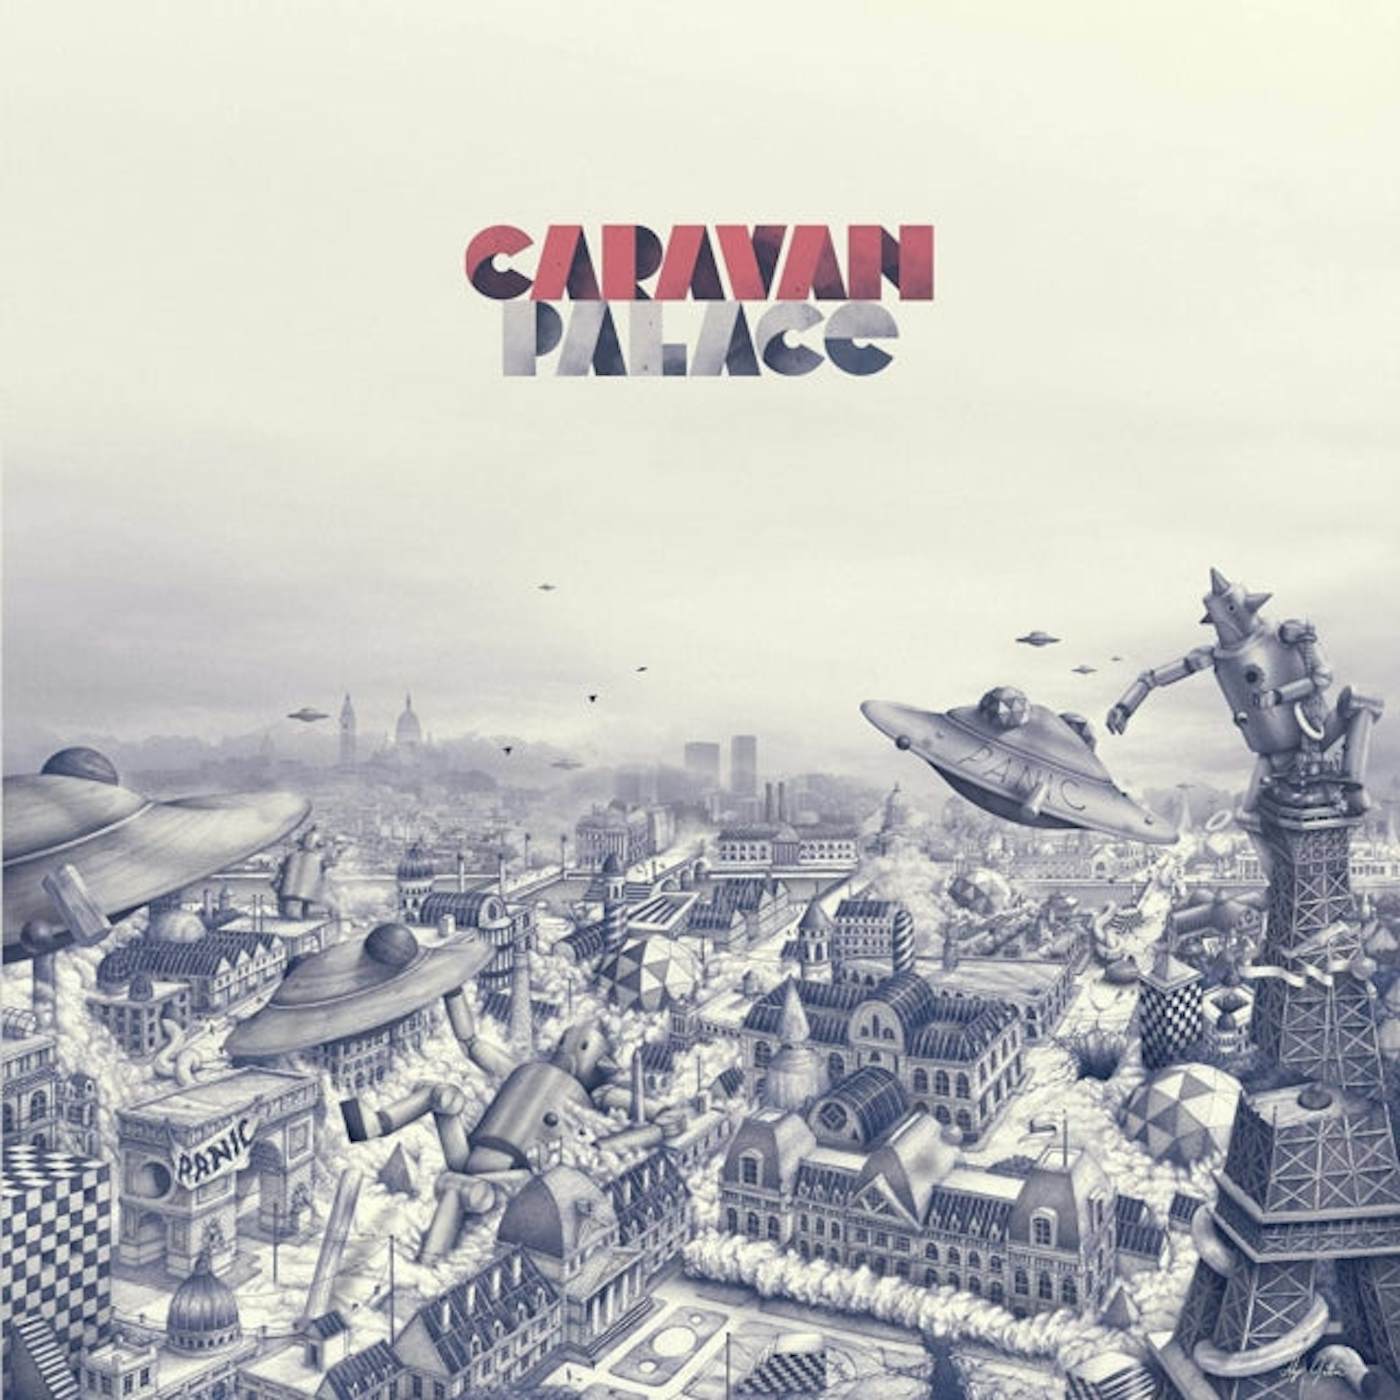 Caravan Palace LP Vinyl Record - Panic